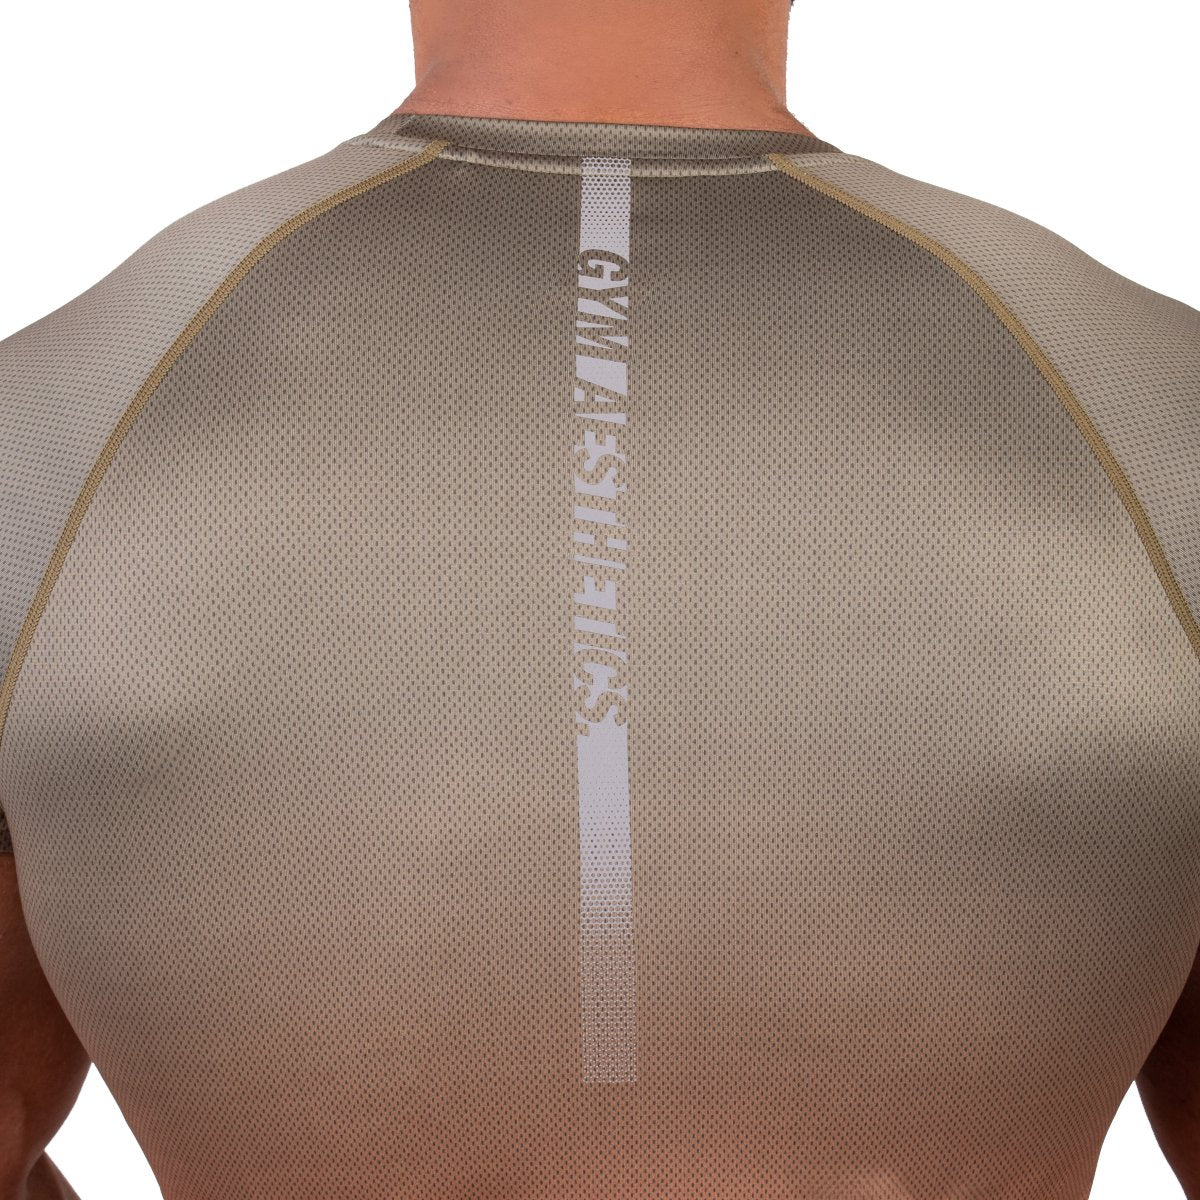 Essential gradient crew neck Sport Shirt for Men